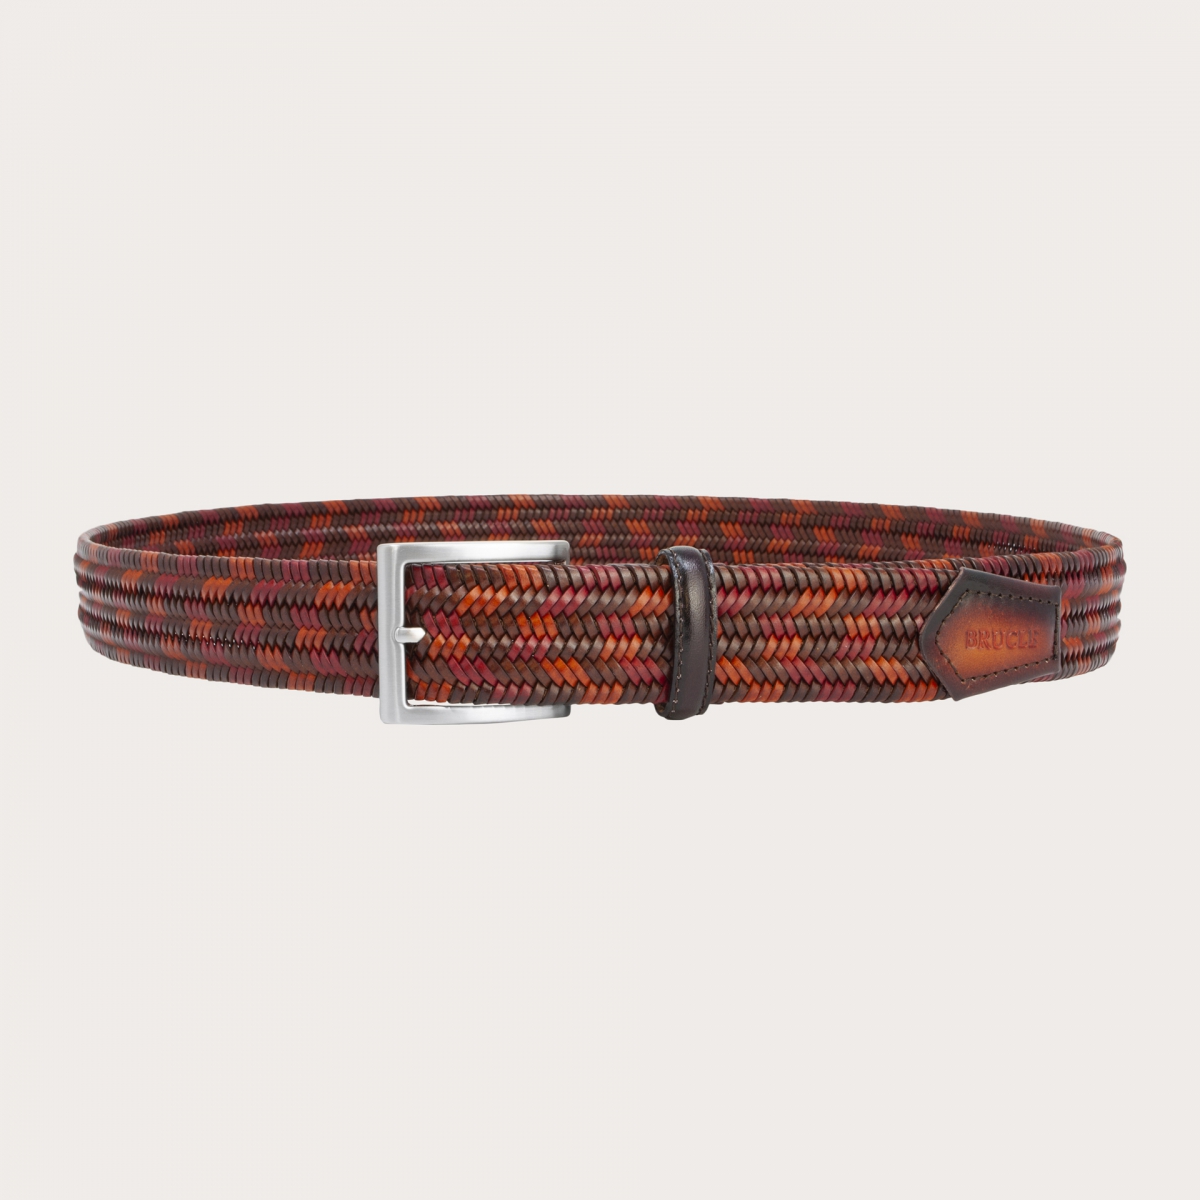 BRUCLE Braided elastic belt in bonded leather, brown, red, burgundy